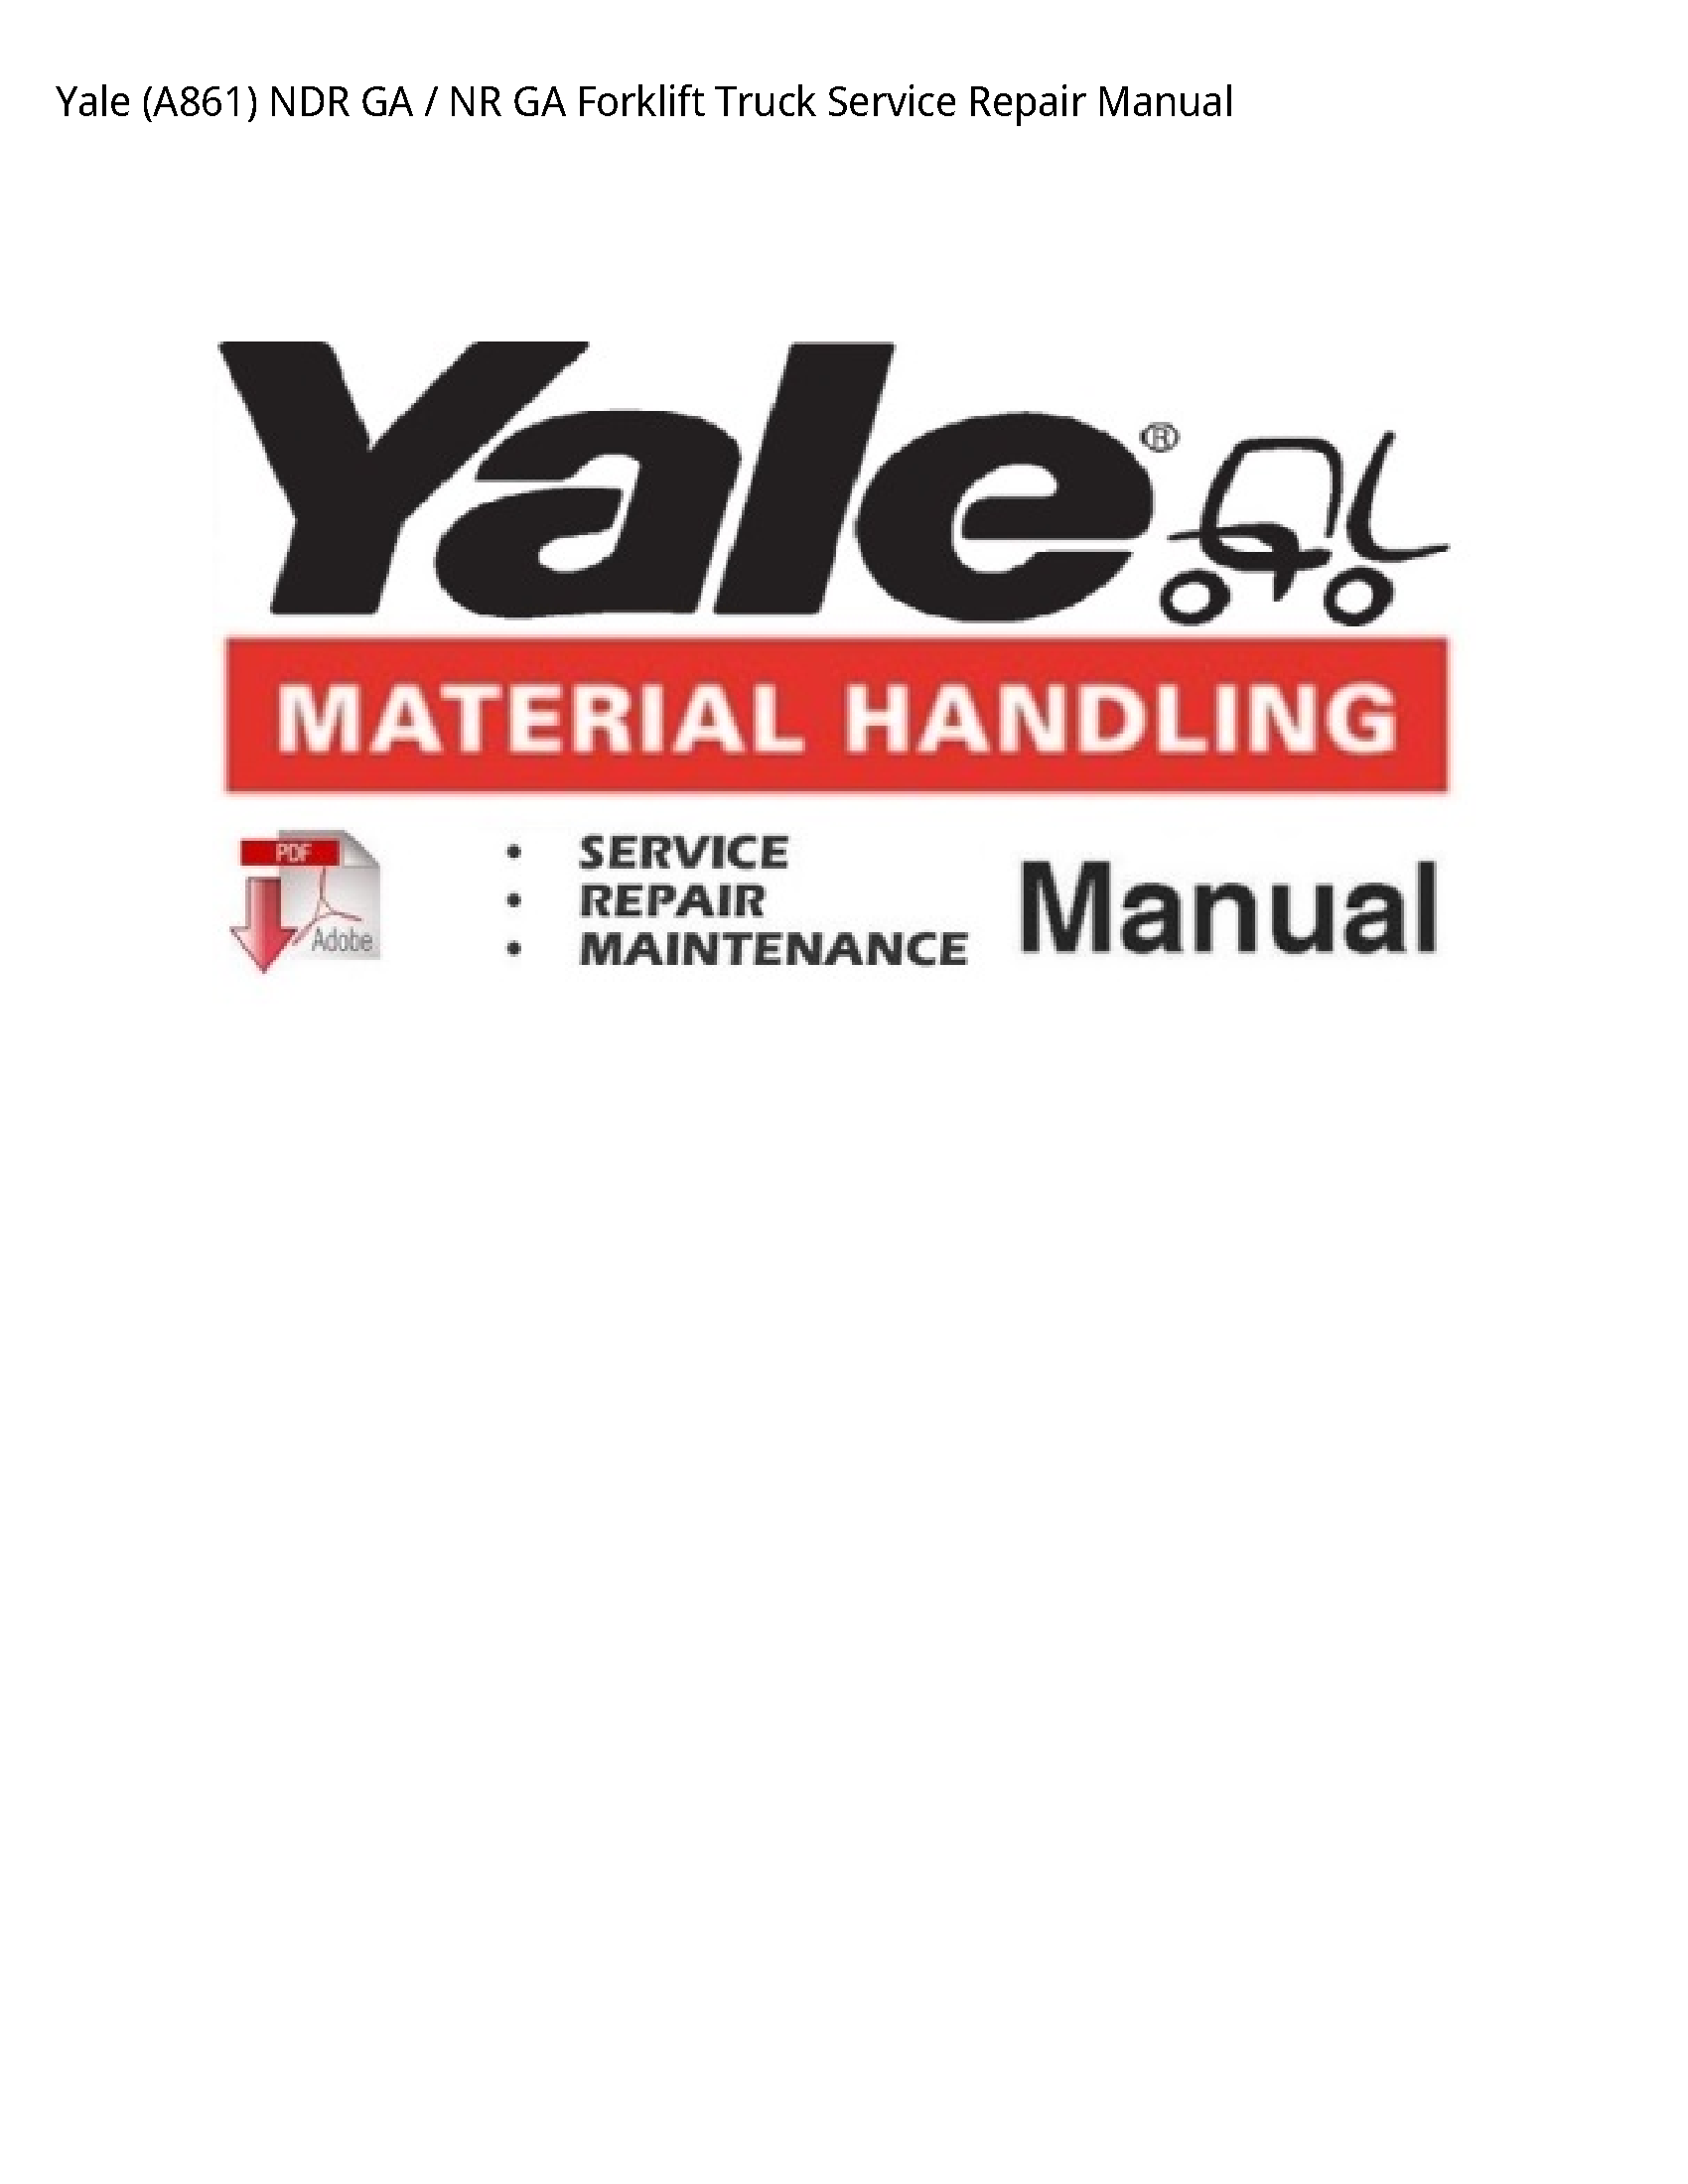 Yale (A861) NDR GA NR GA Forklift Truck manual